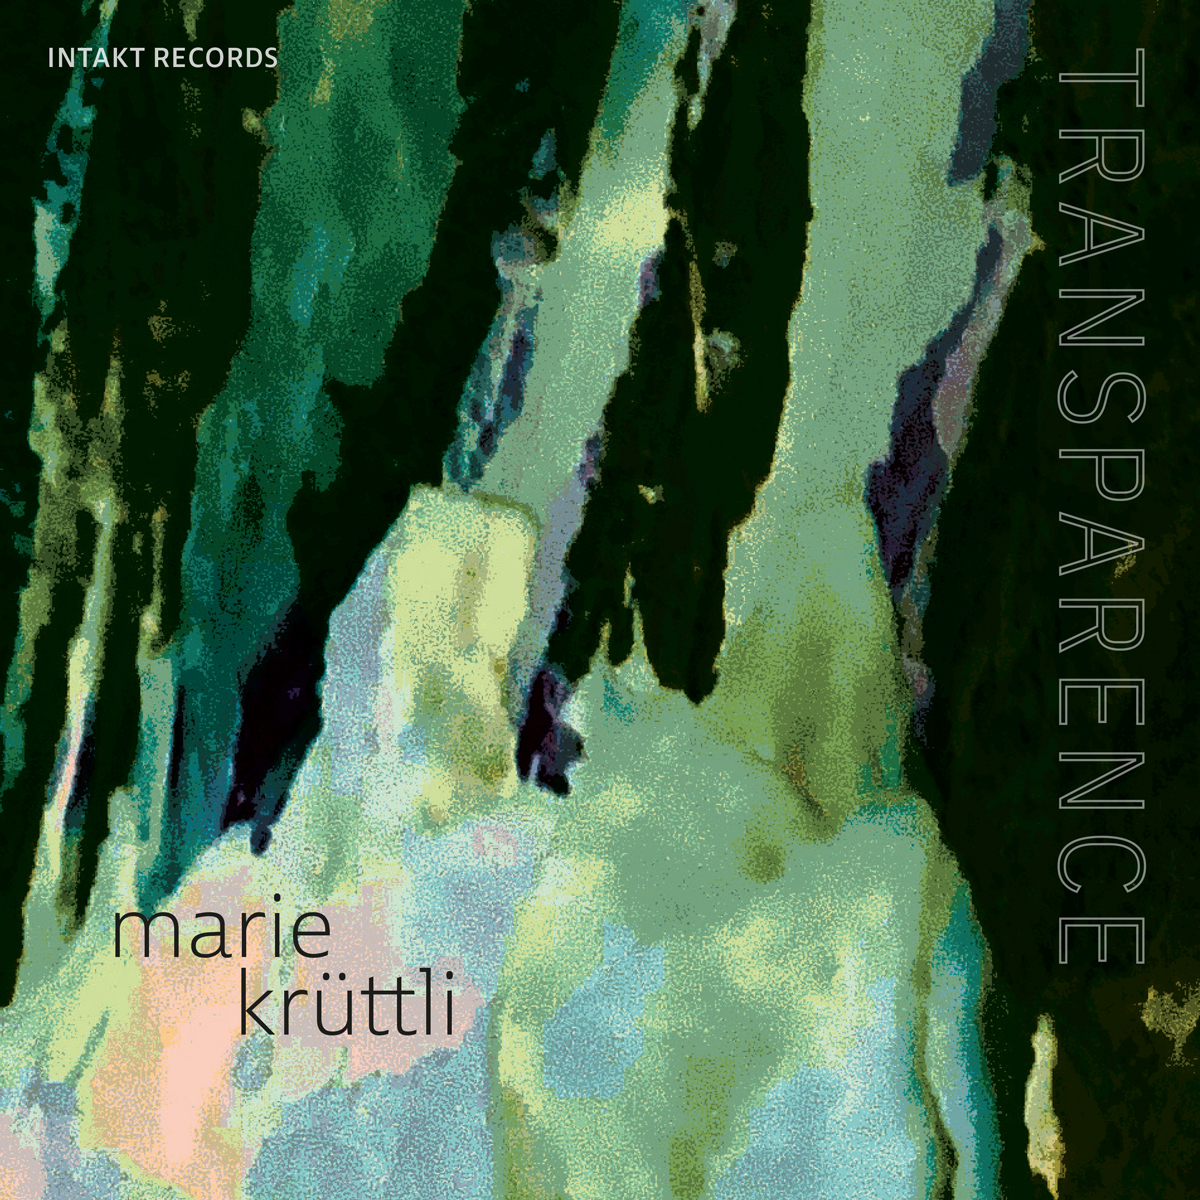 Cover Web:
Marie Krüttli
Transparence Intakt CD 401